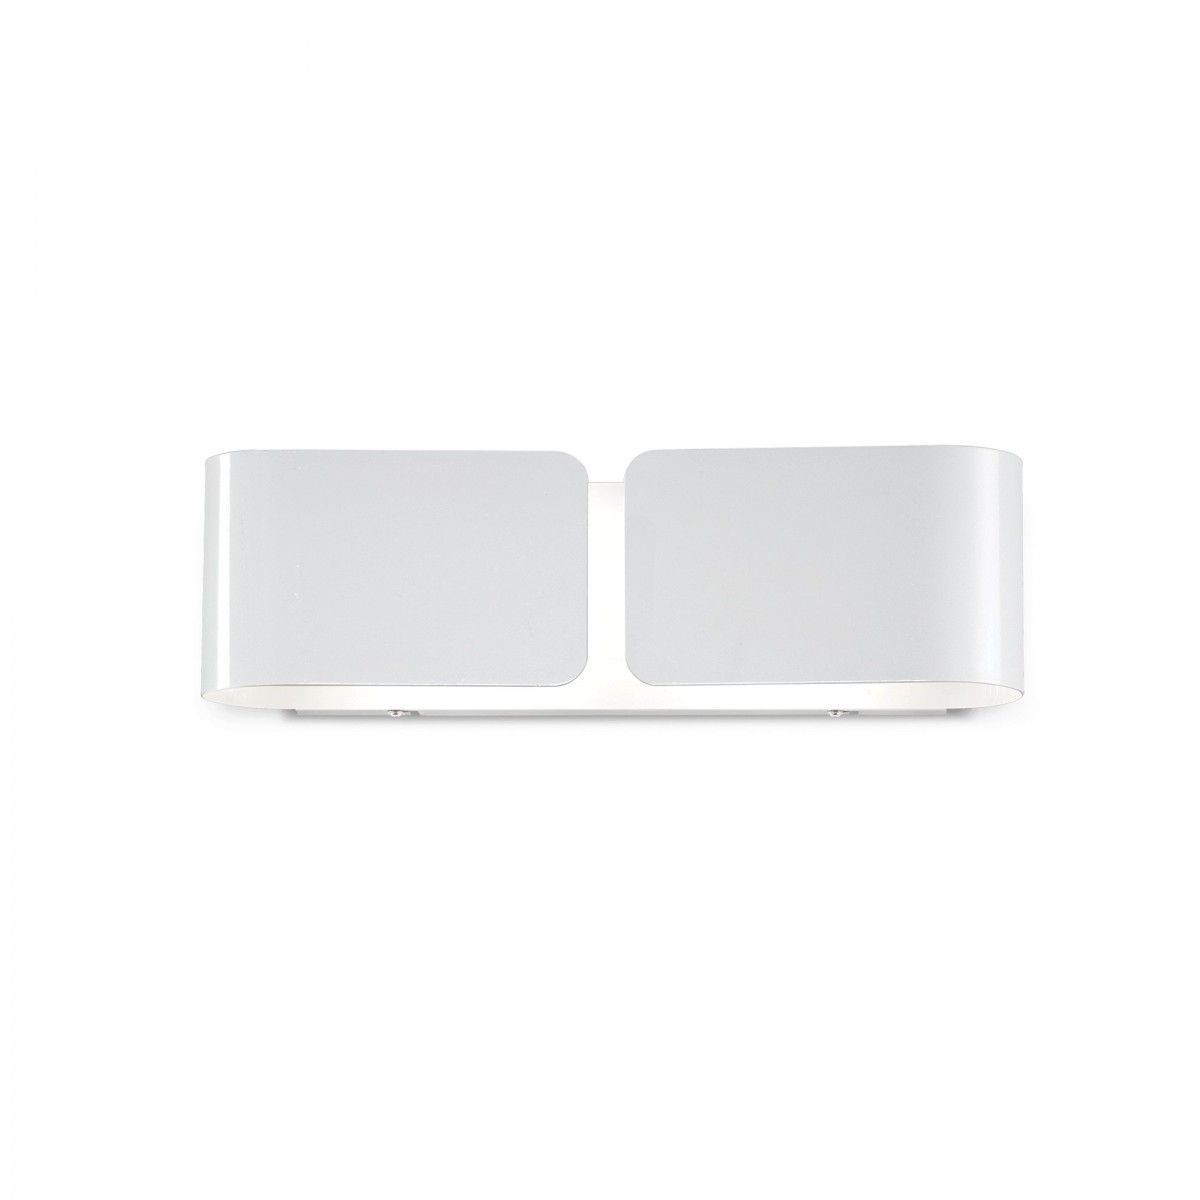 nástenné svietidlo Ideal lux CLIP 014166 - biela